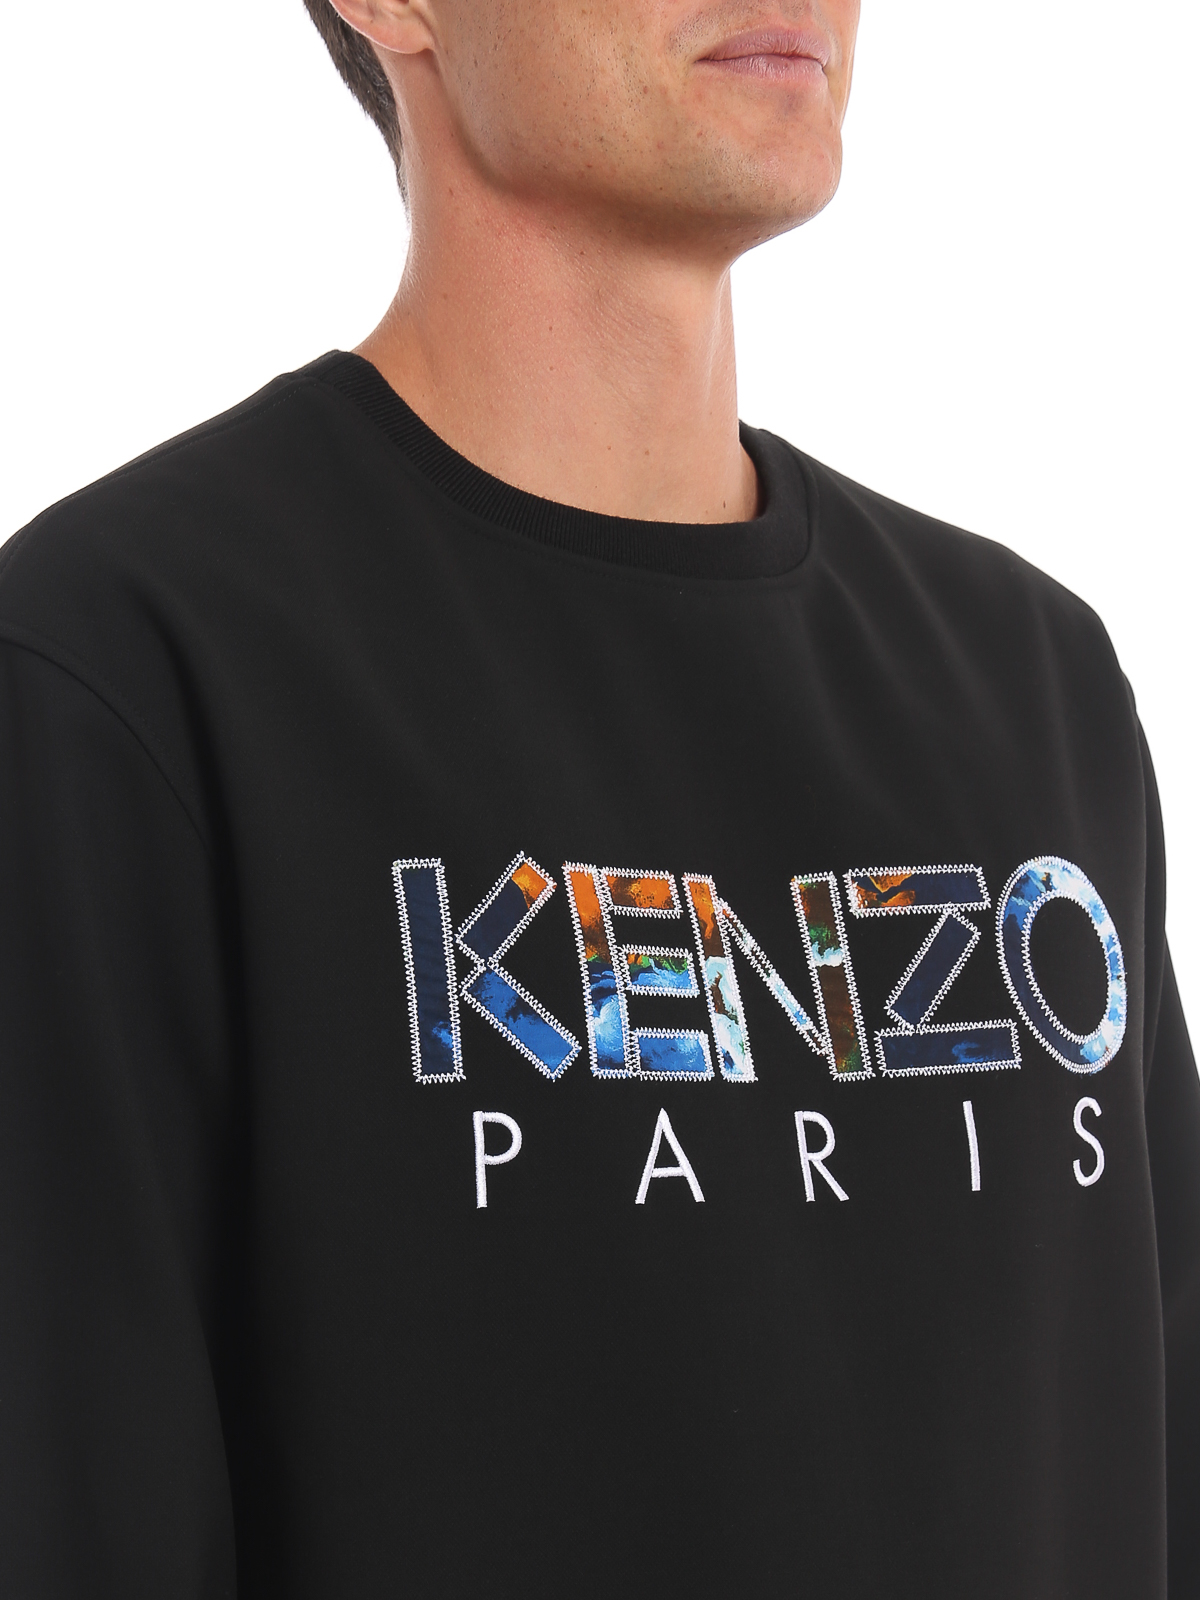 kenzo paris black sweatshirt